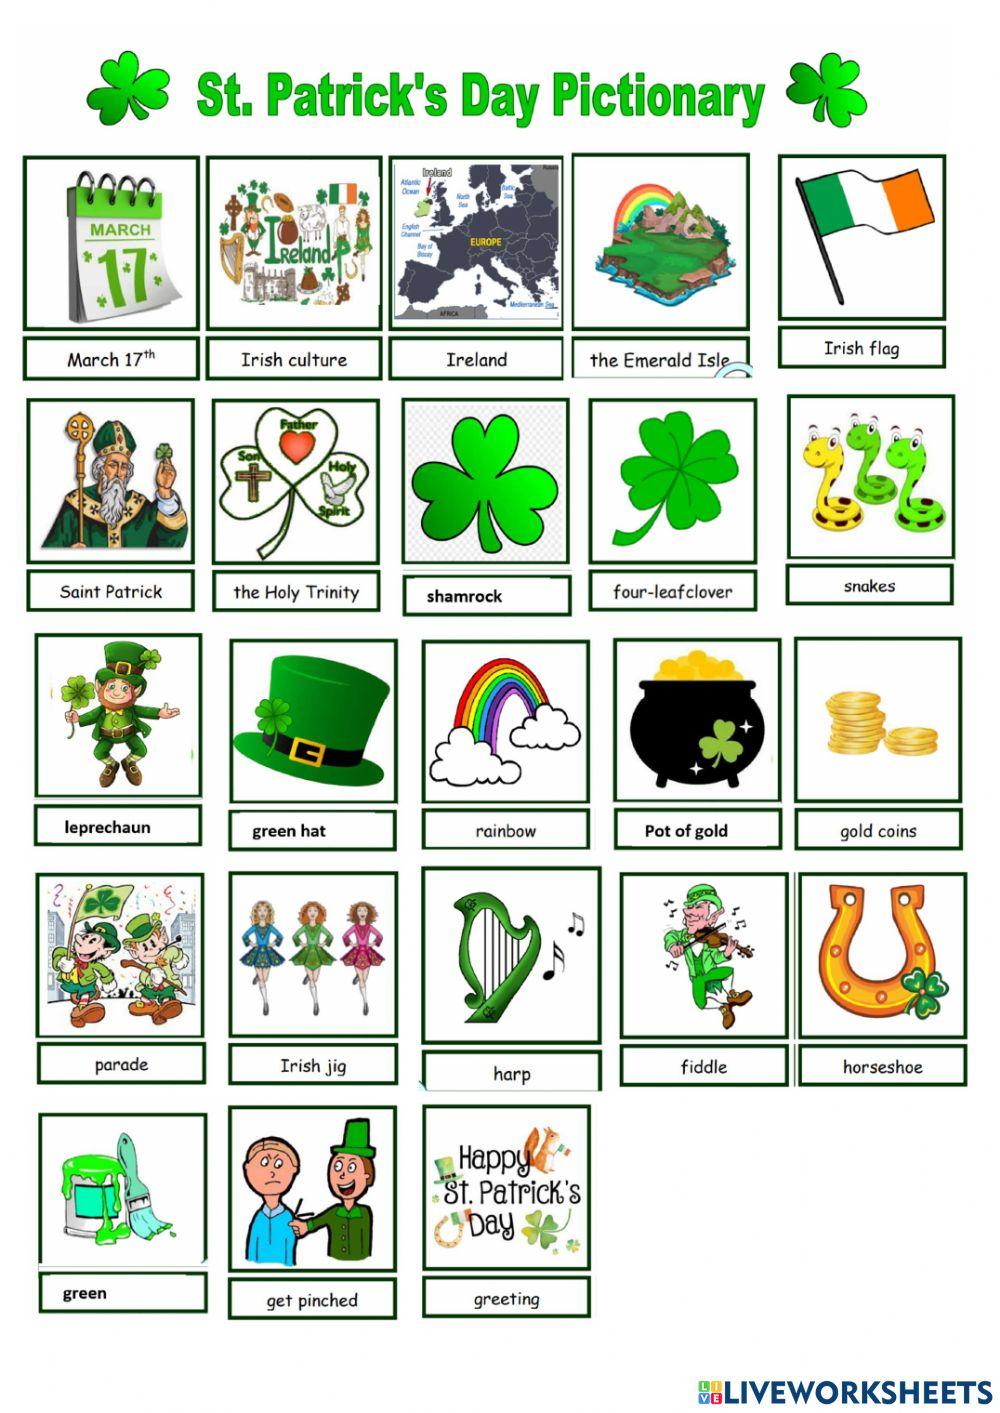 St. Patrick's day pictionary